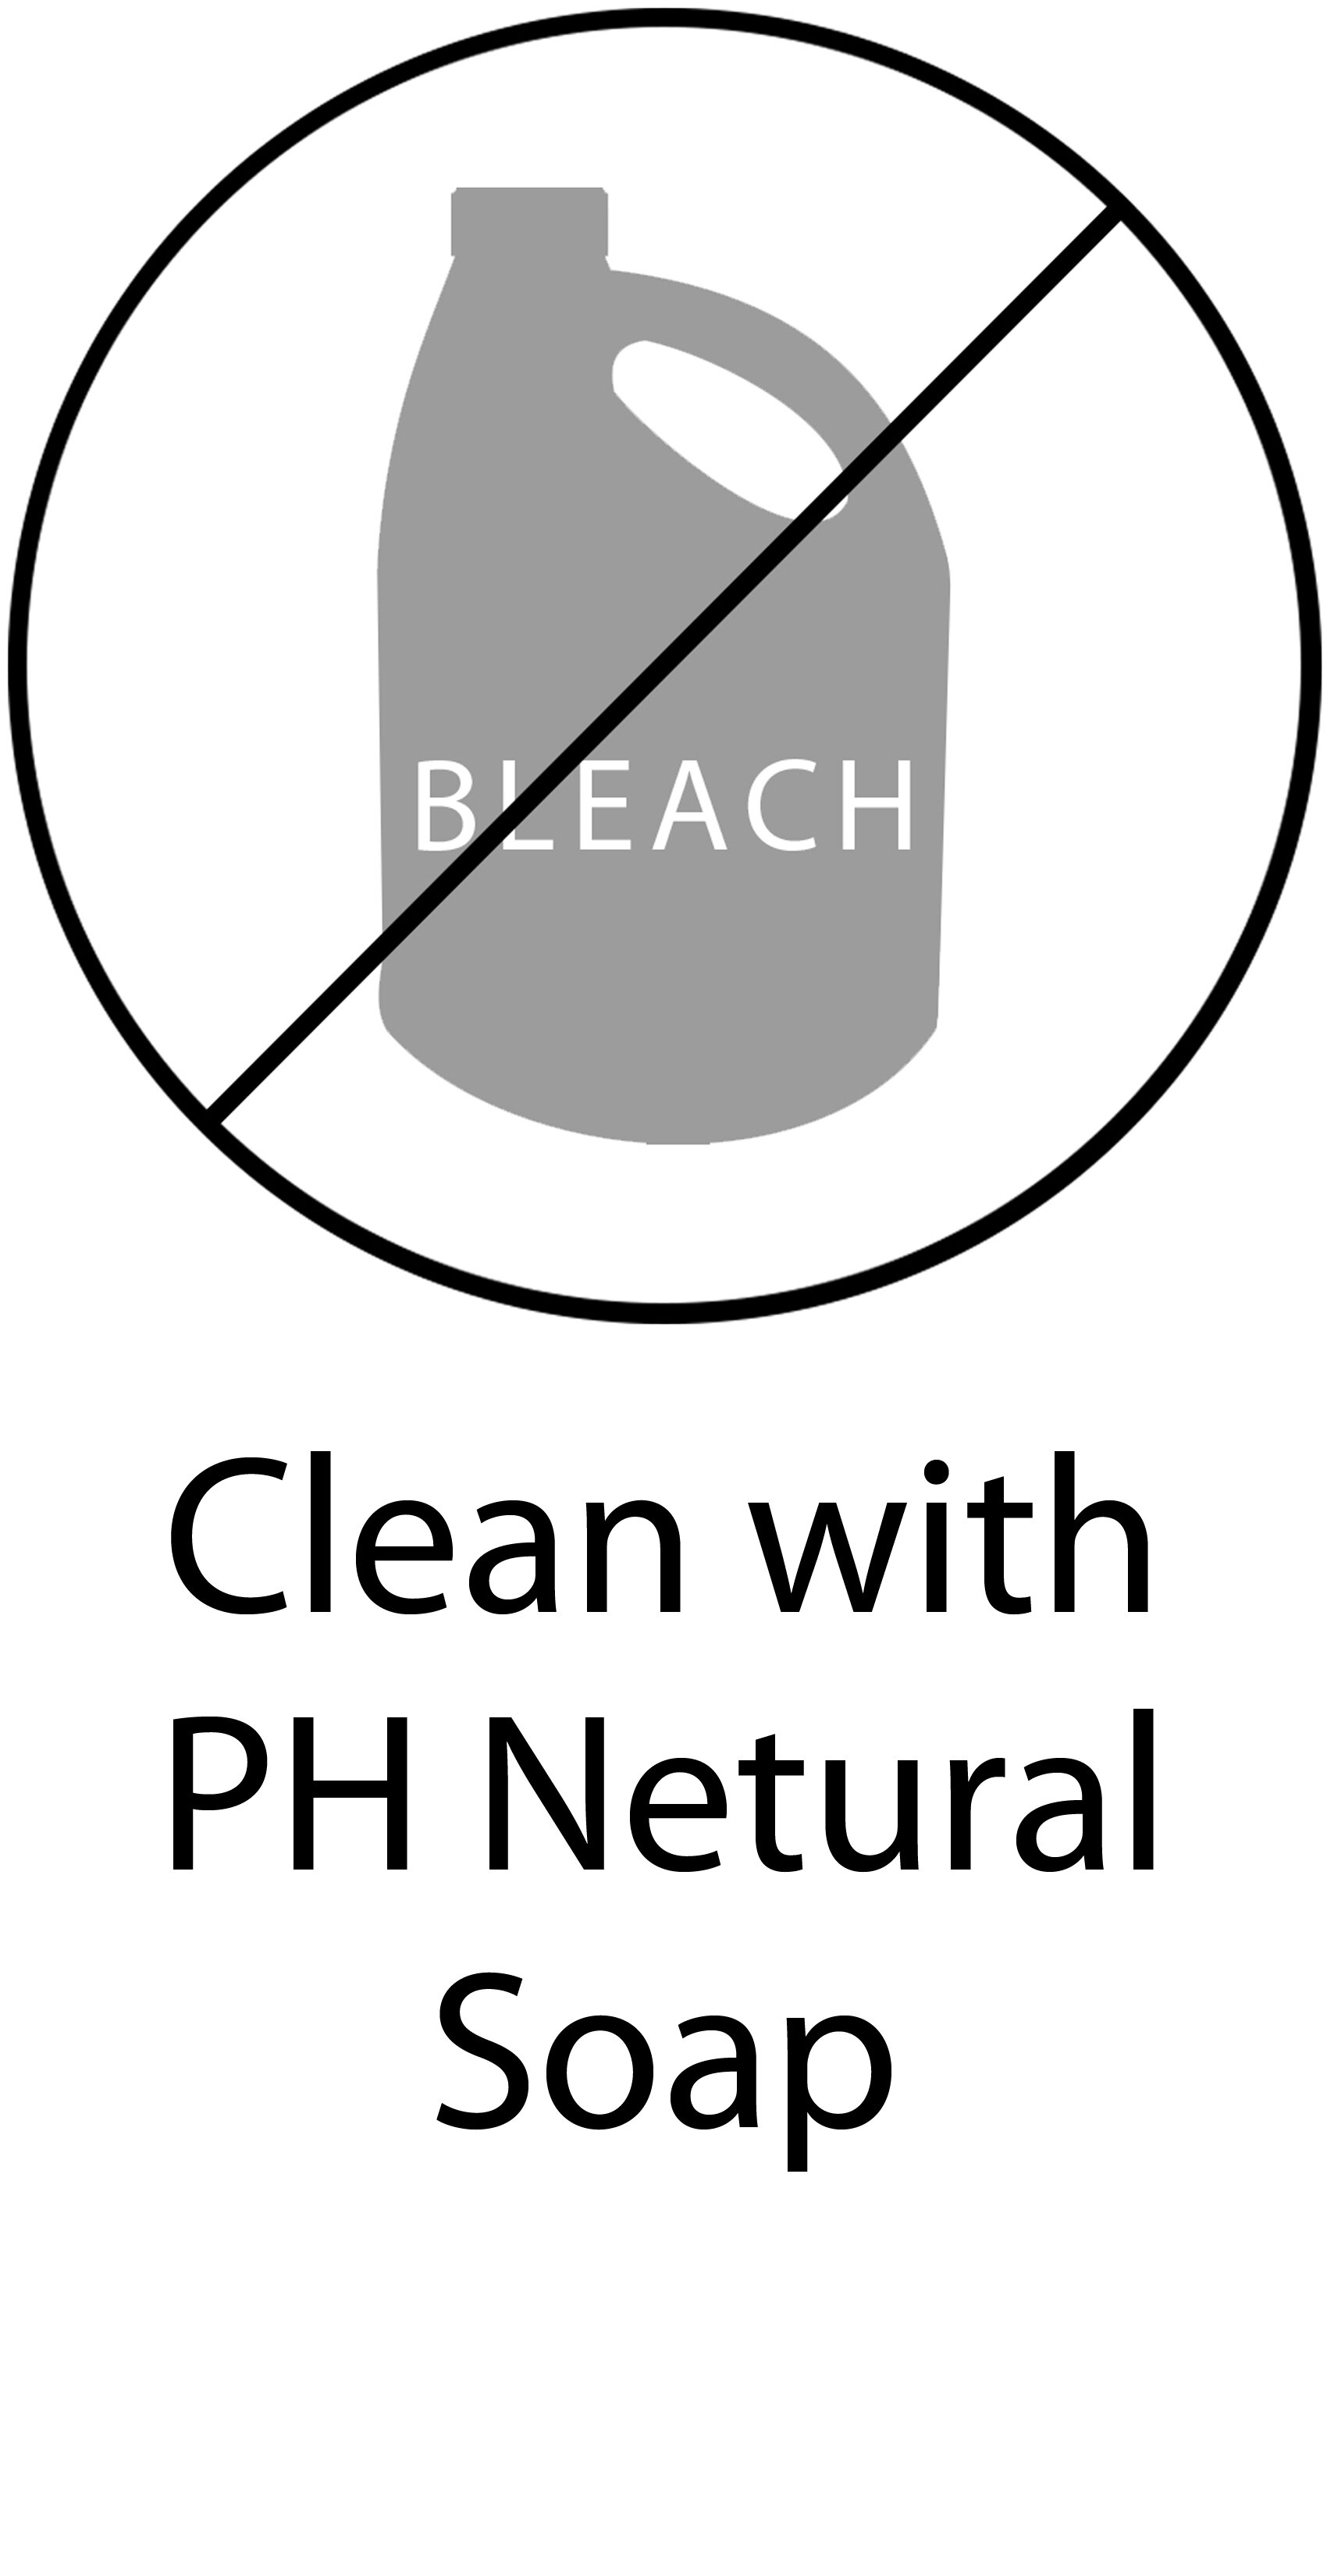 08 Clean with PH Neutral Soap.jpg